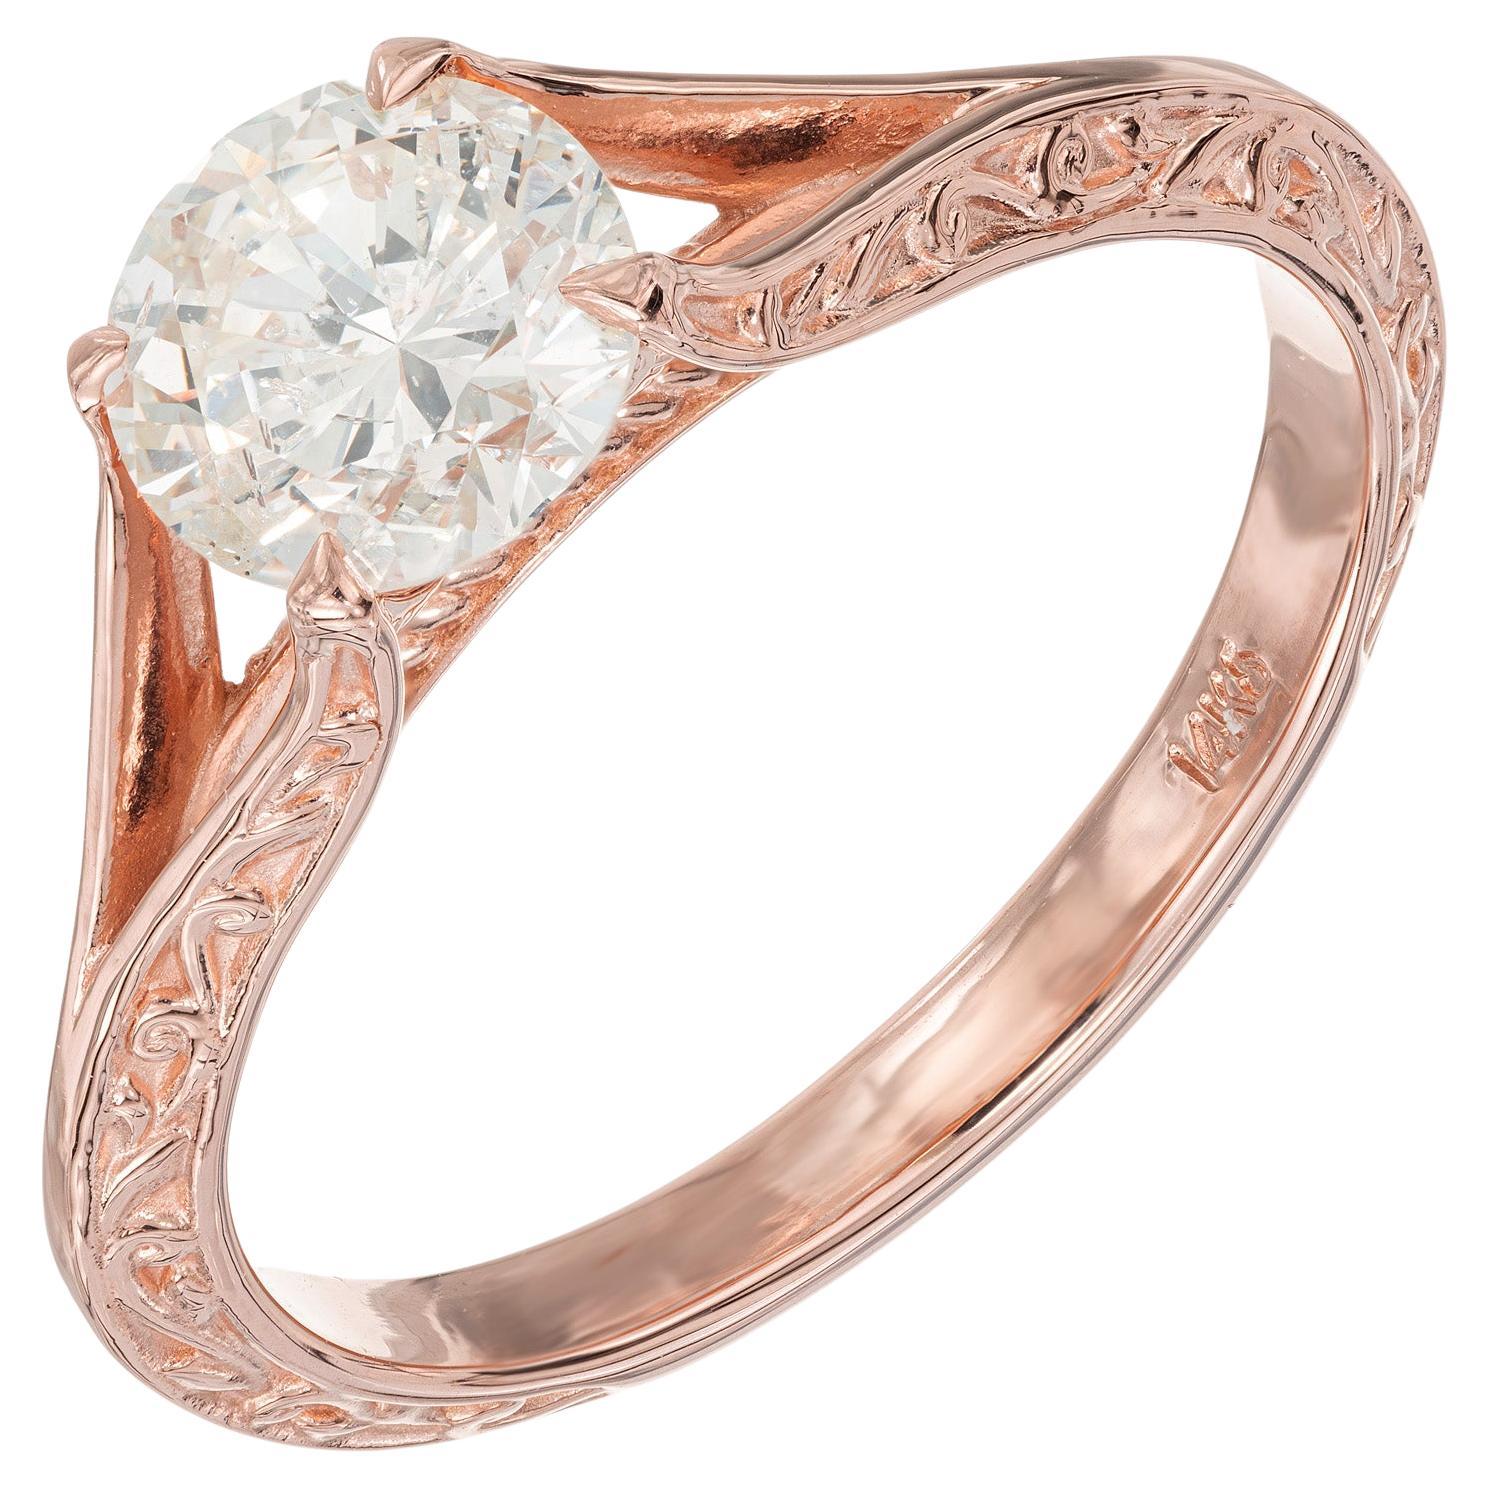 Peter Suchy EGL Certified 1.05 Carat Diamond Rose Gold Engagement Ring